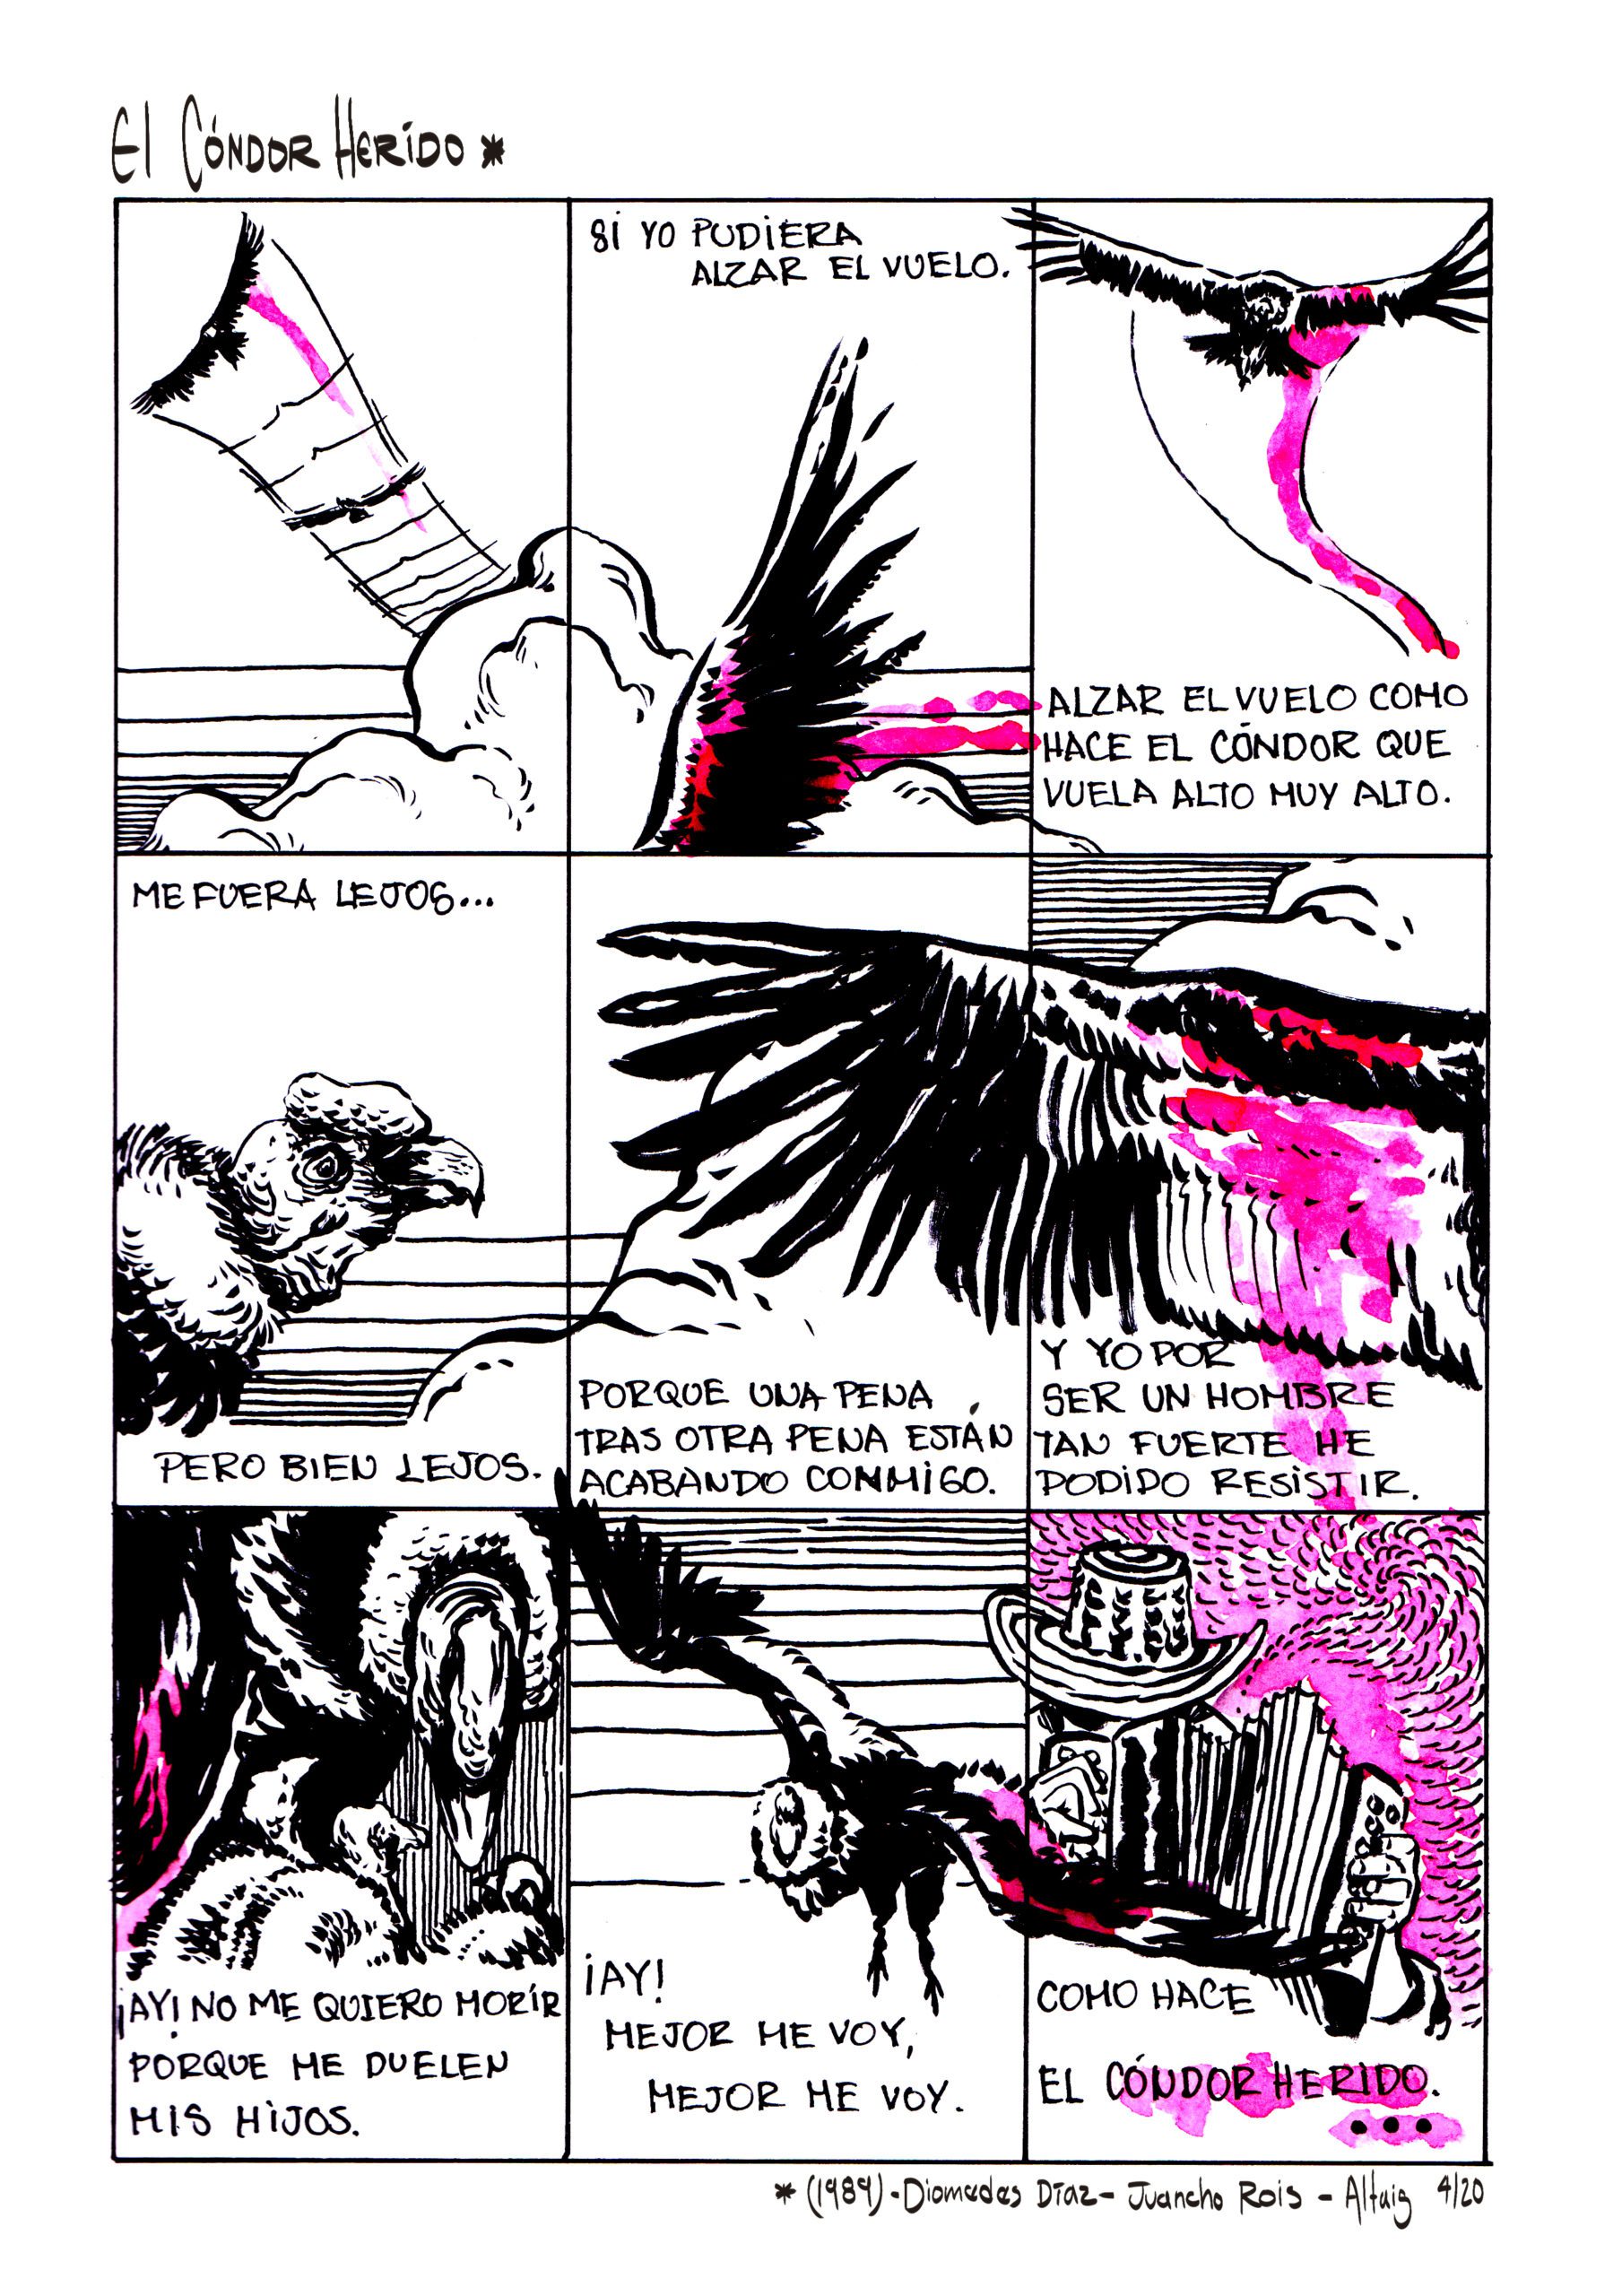 El condor herido Altais Comics scaled